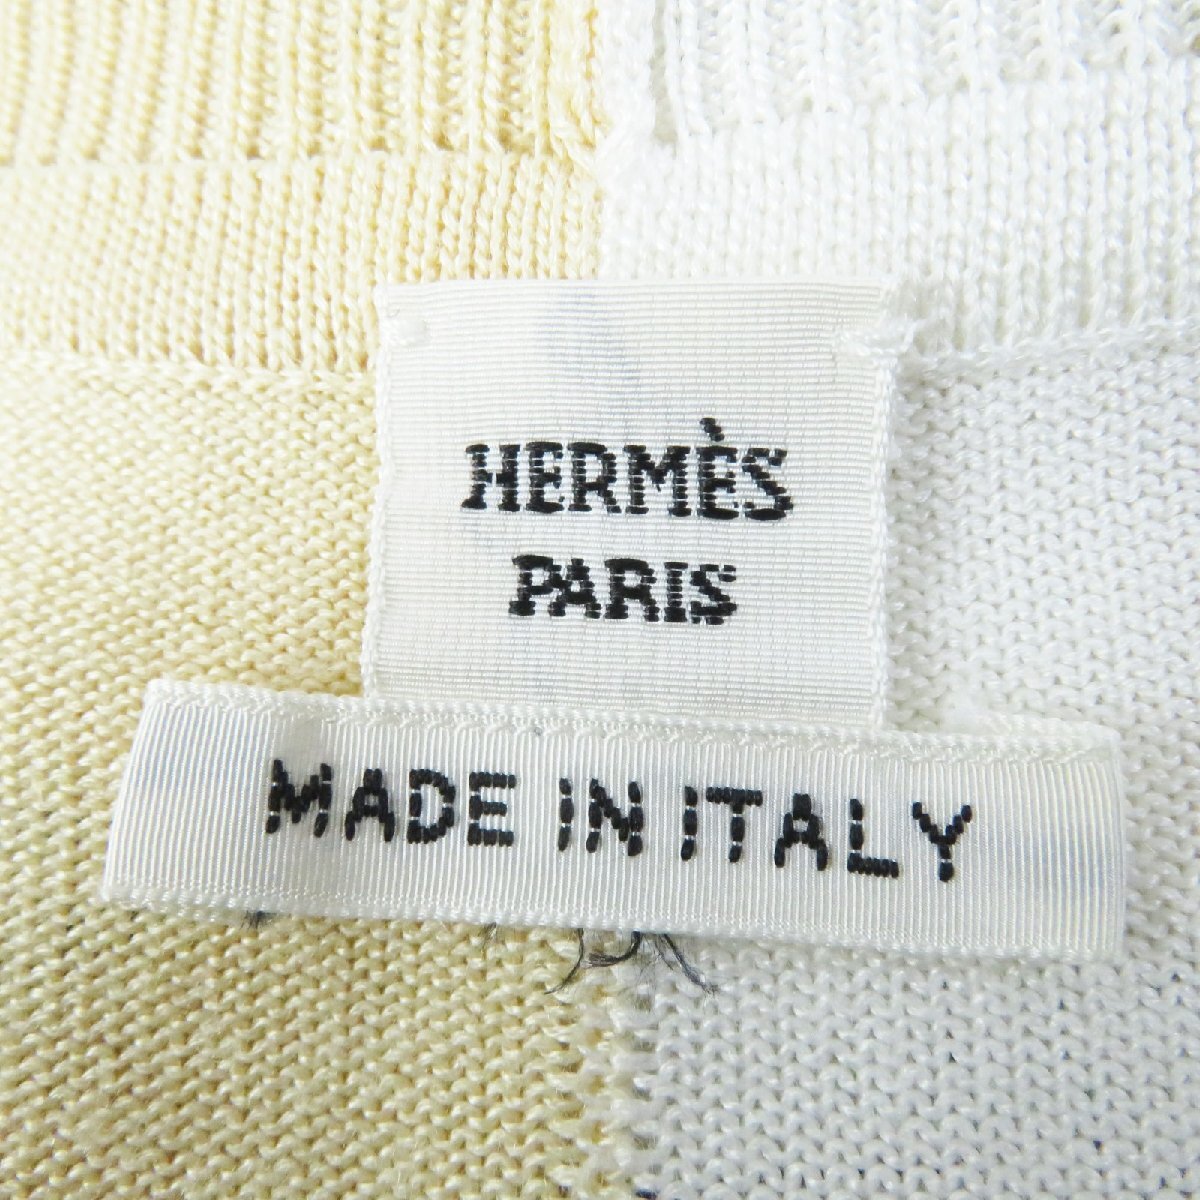  превосходный товар *HERMES Hermes 22 год производства 2E2809DOtsu il re-n шелк 100% One-piece белый бежевый 36 Италия производства стандартный товар женский 